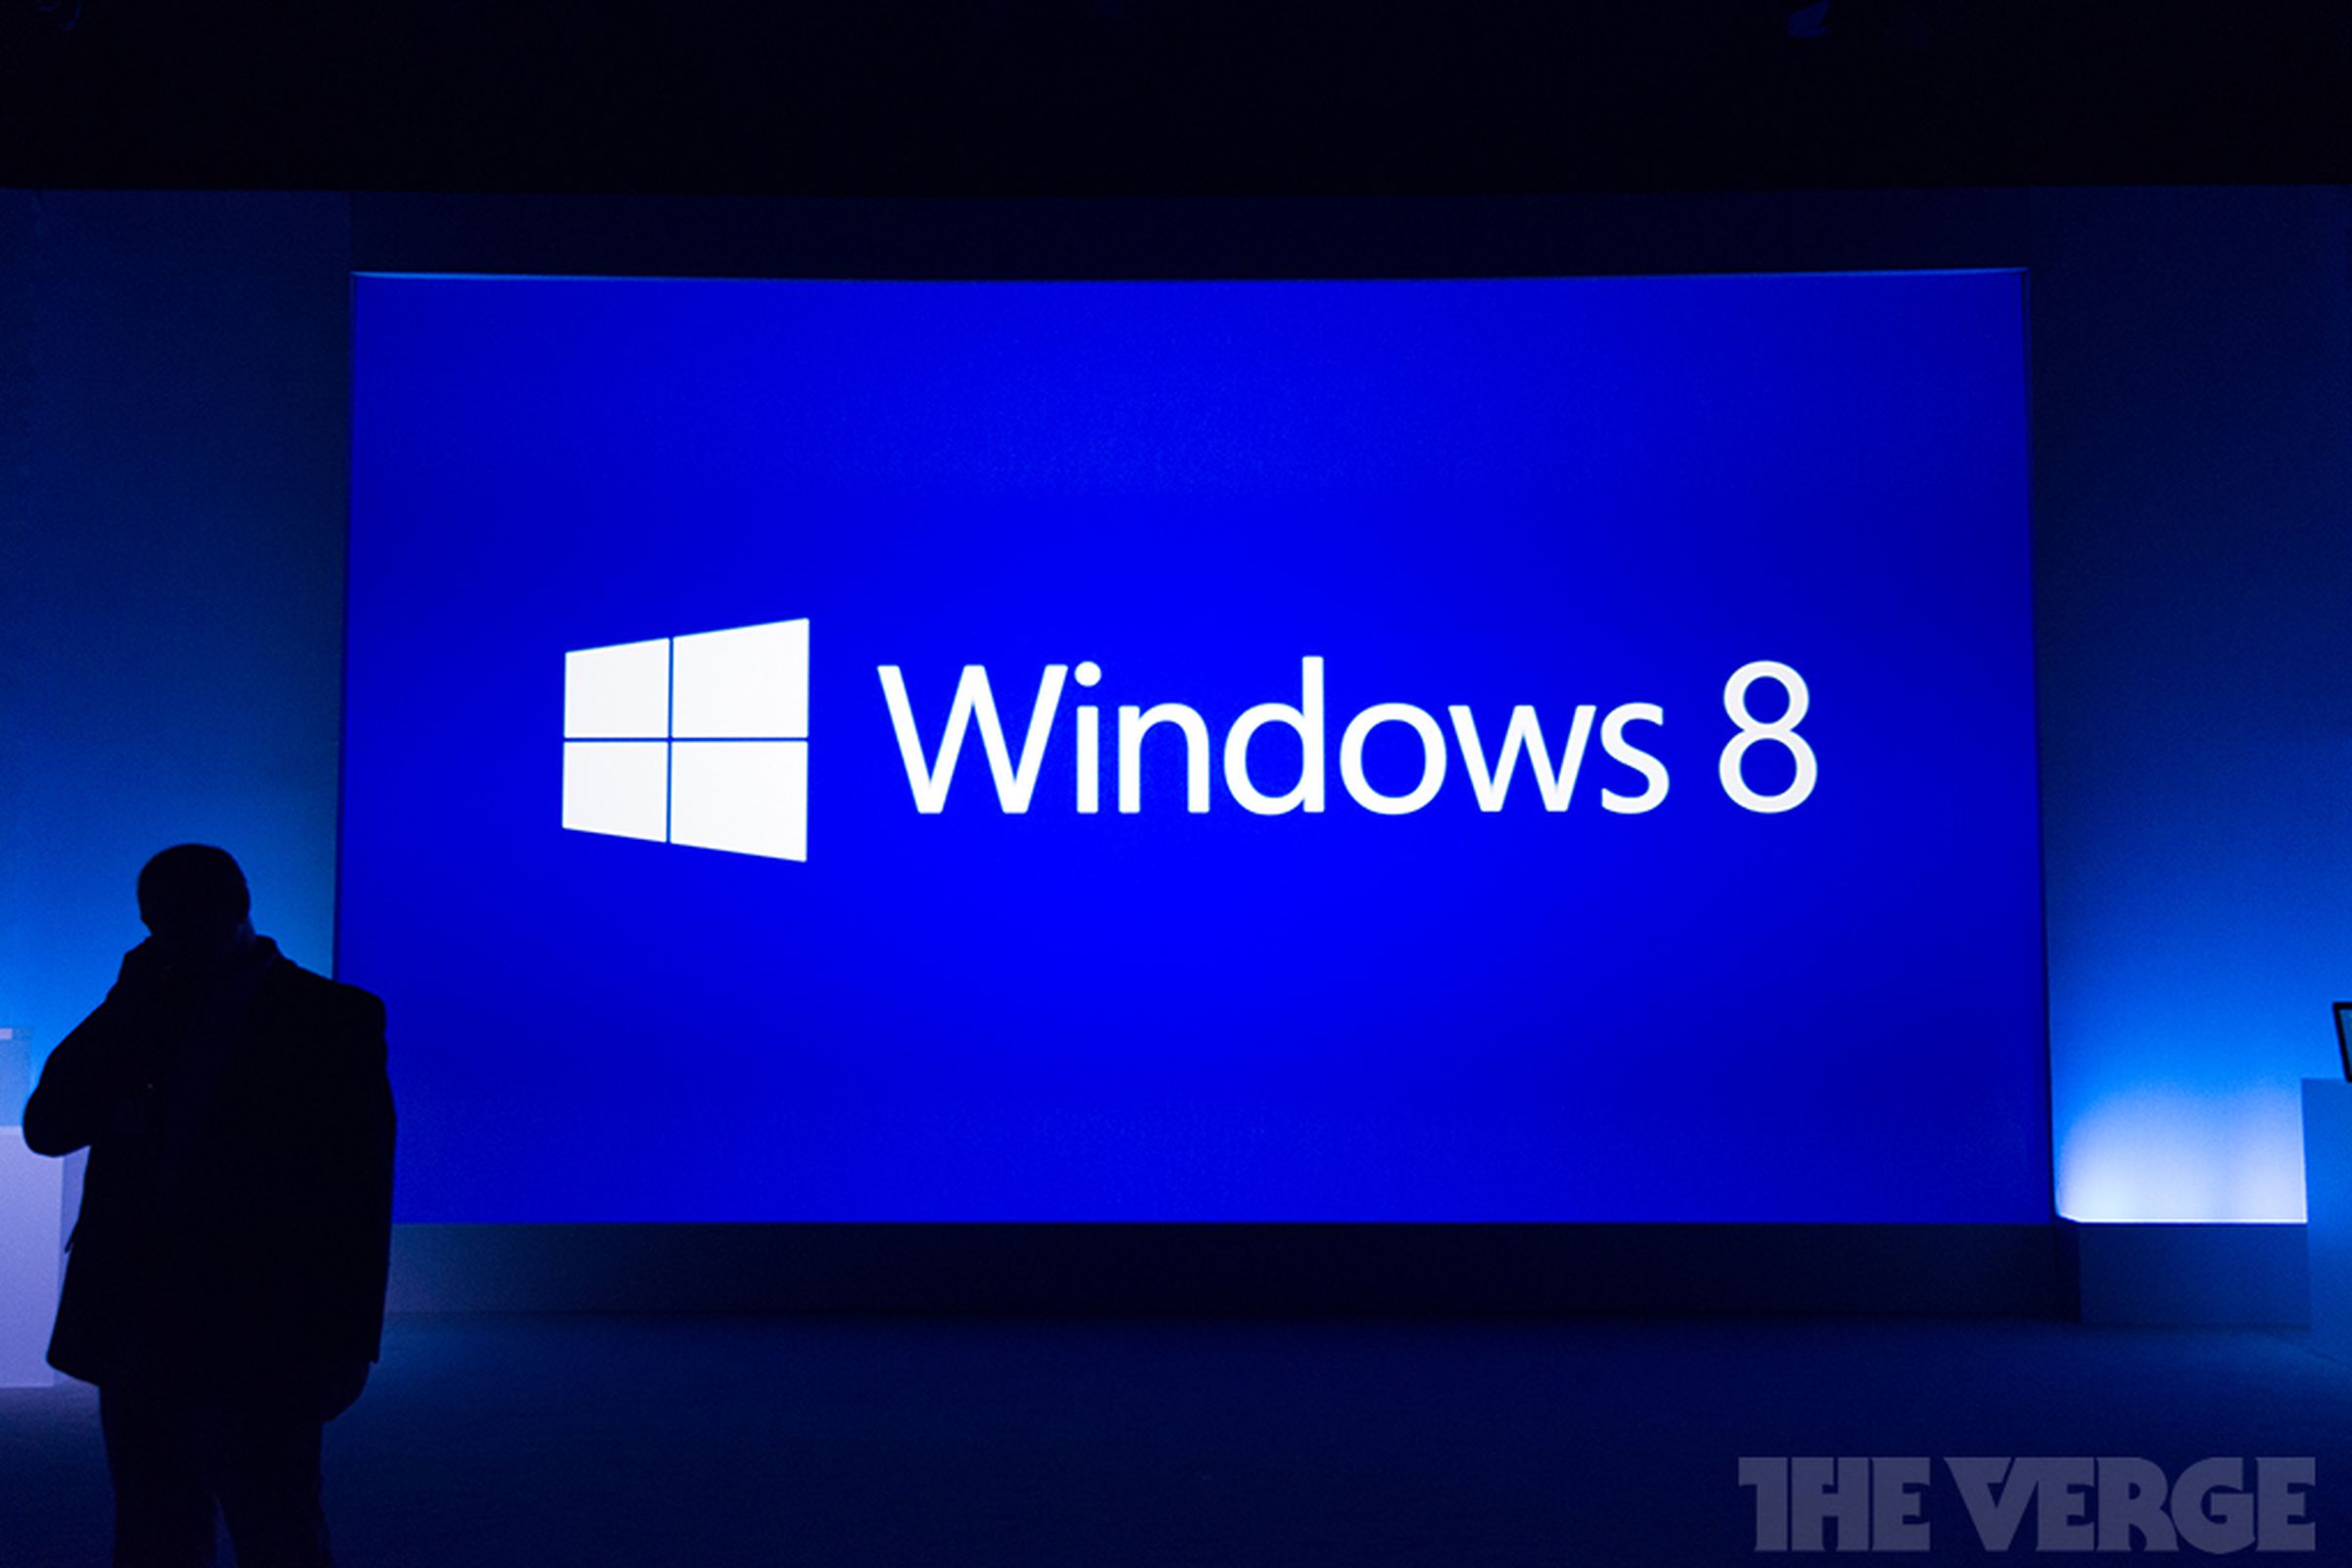 Windows 8 logo stock